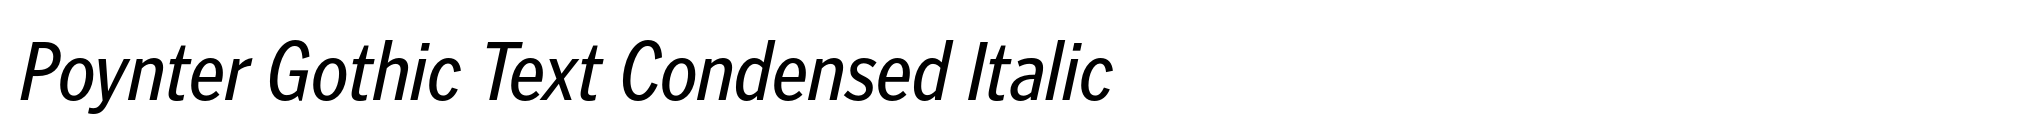 Poynter Gothic Text Condensed Italic image